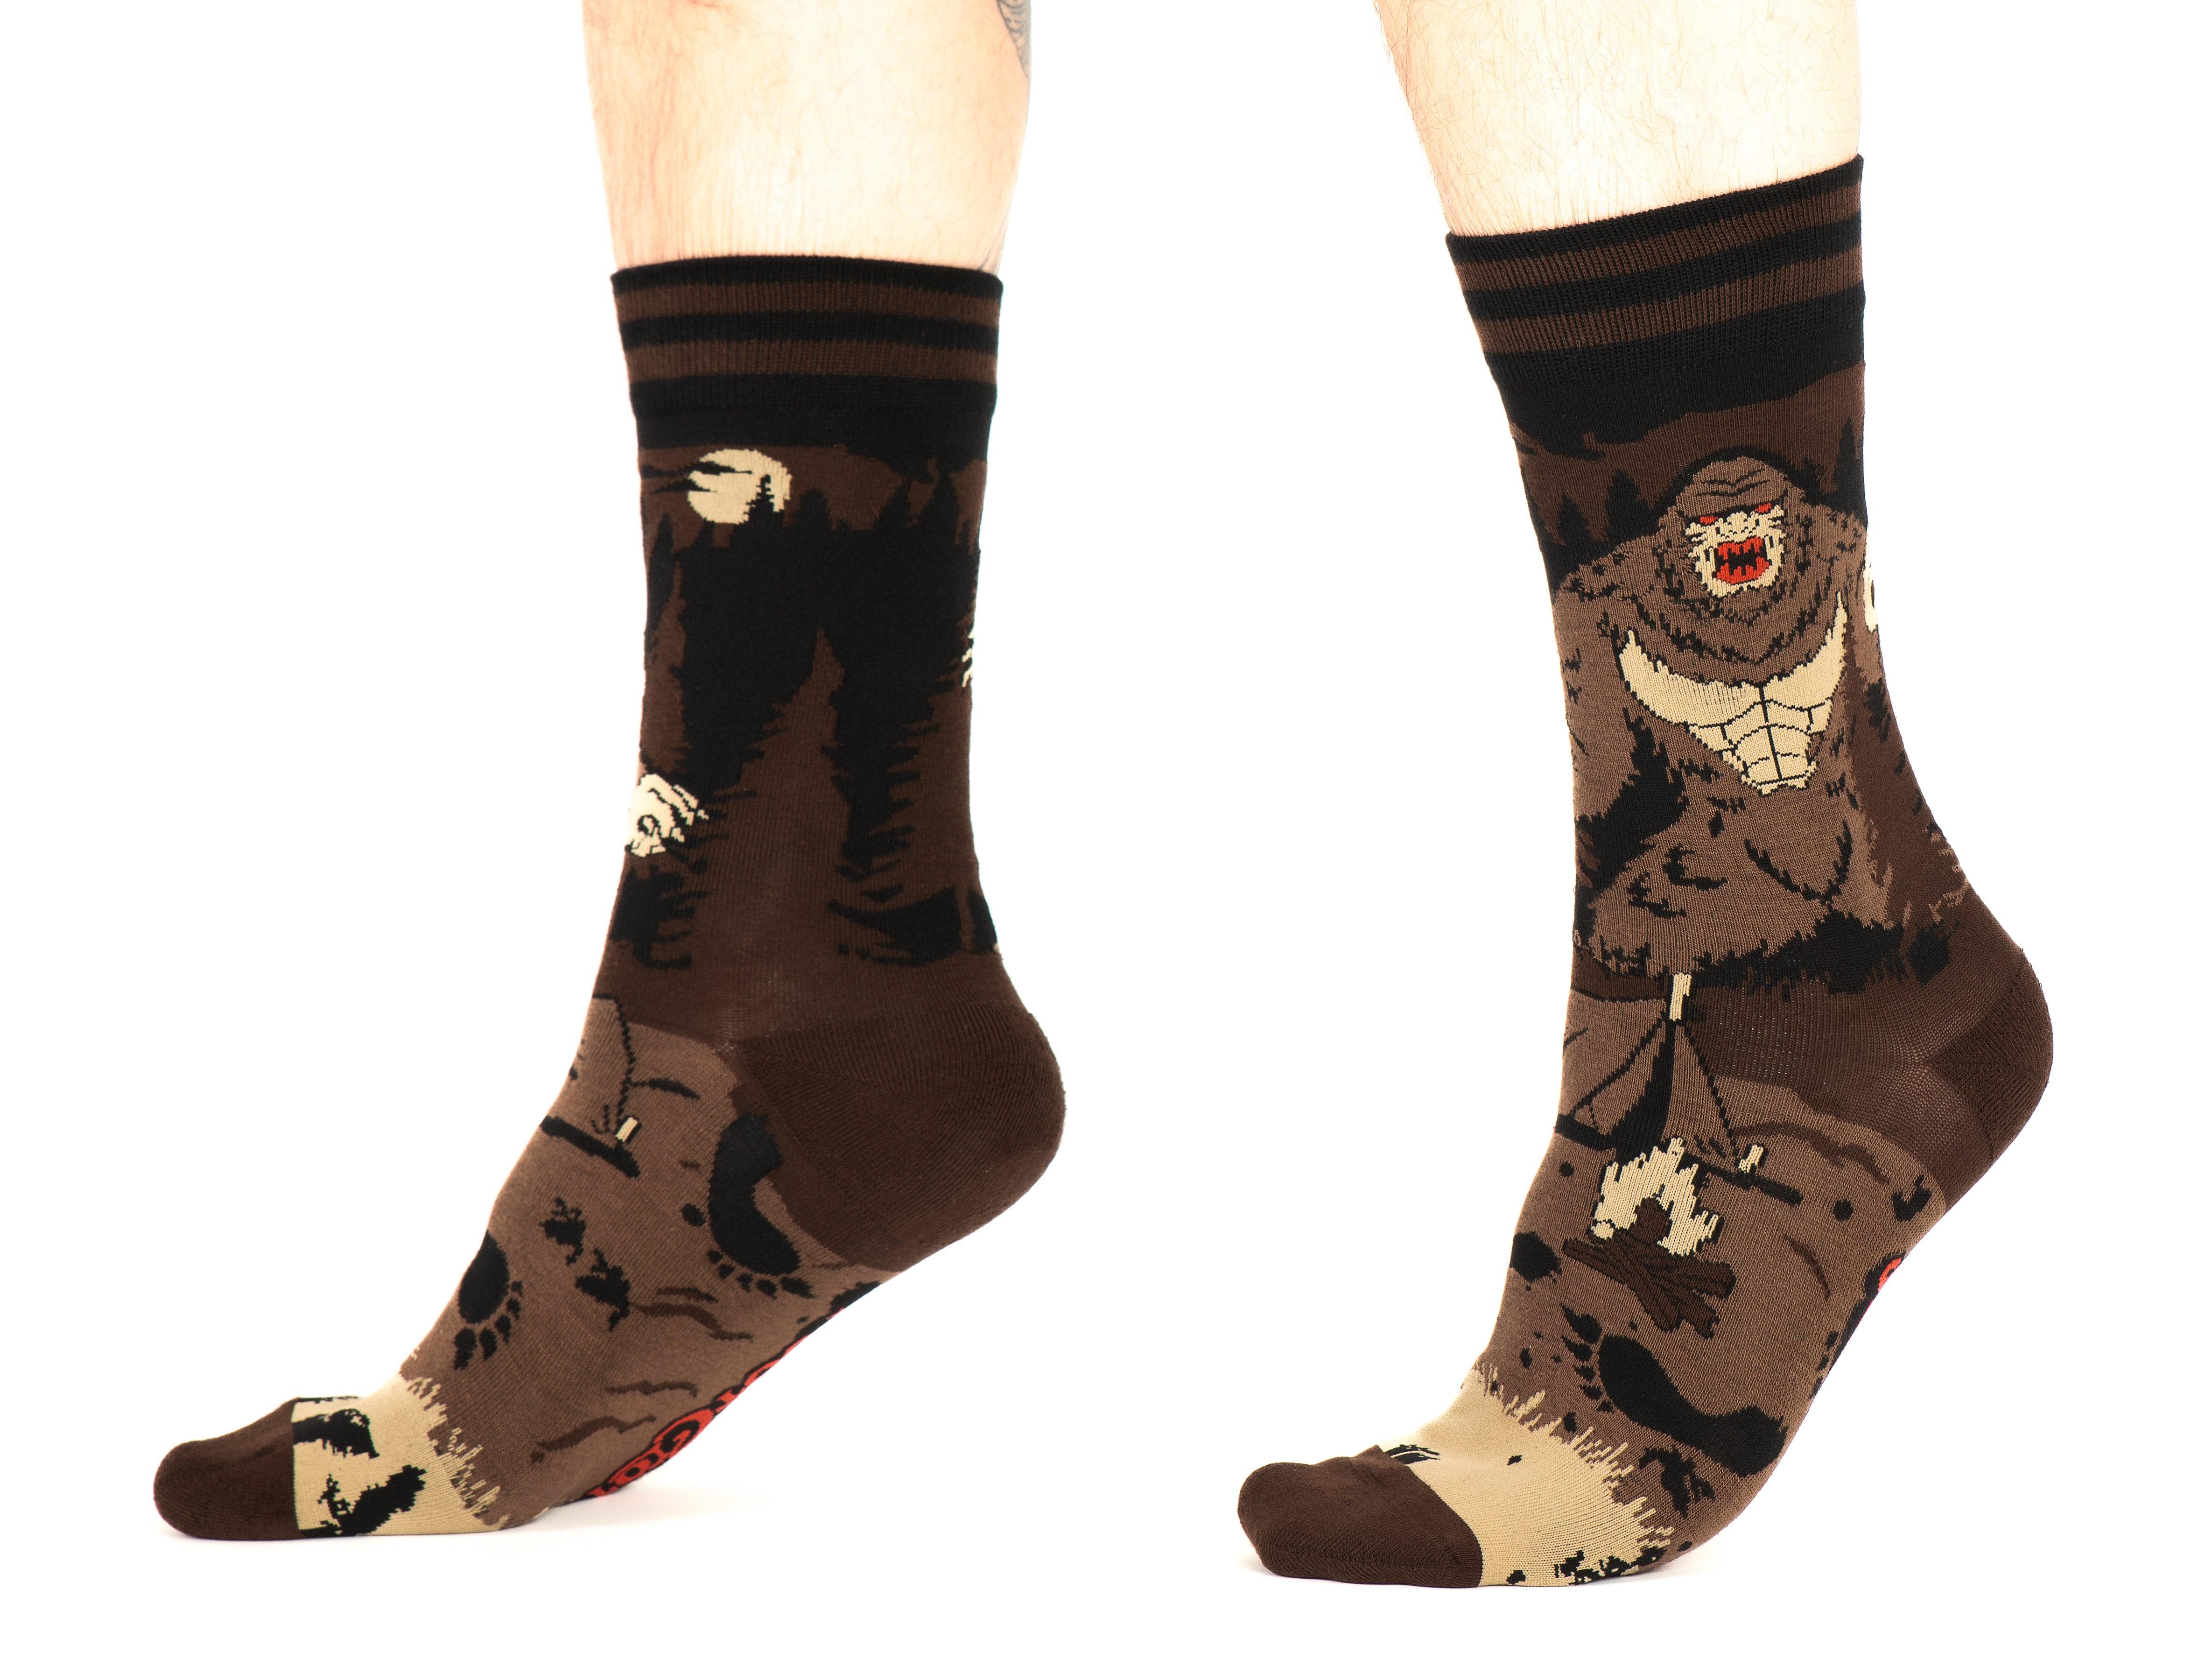 Bigfoot Crew Socks - FootClothes